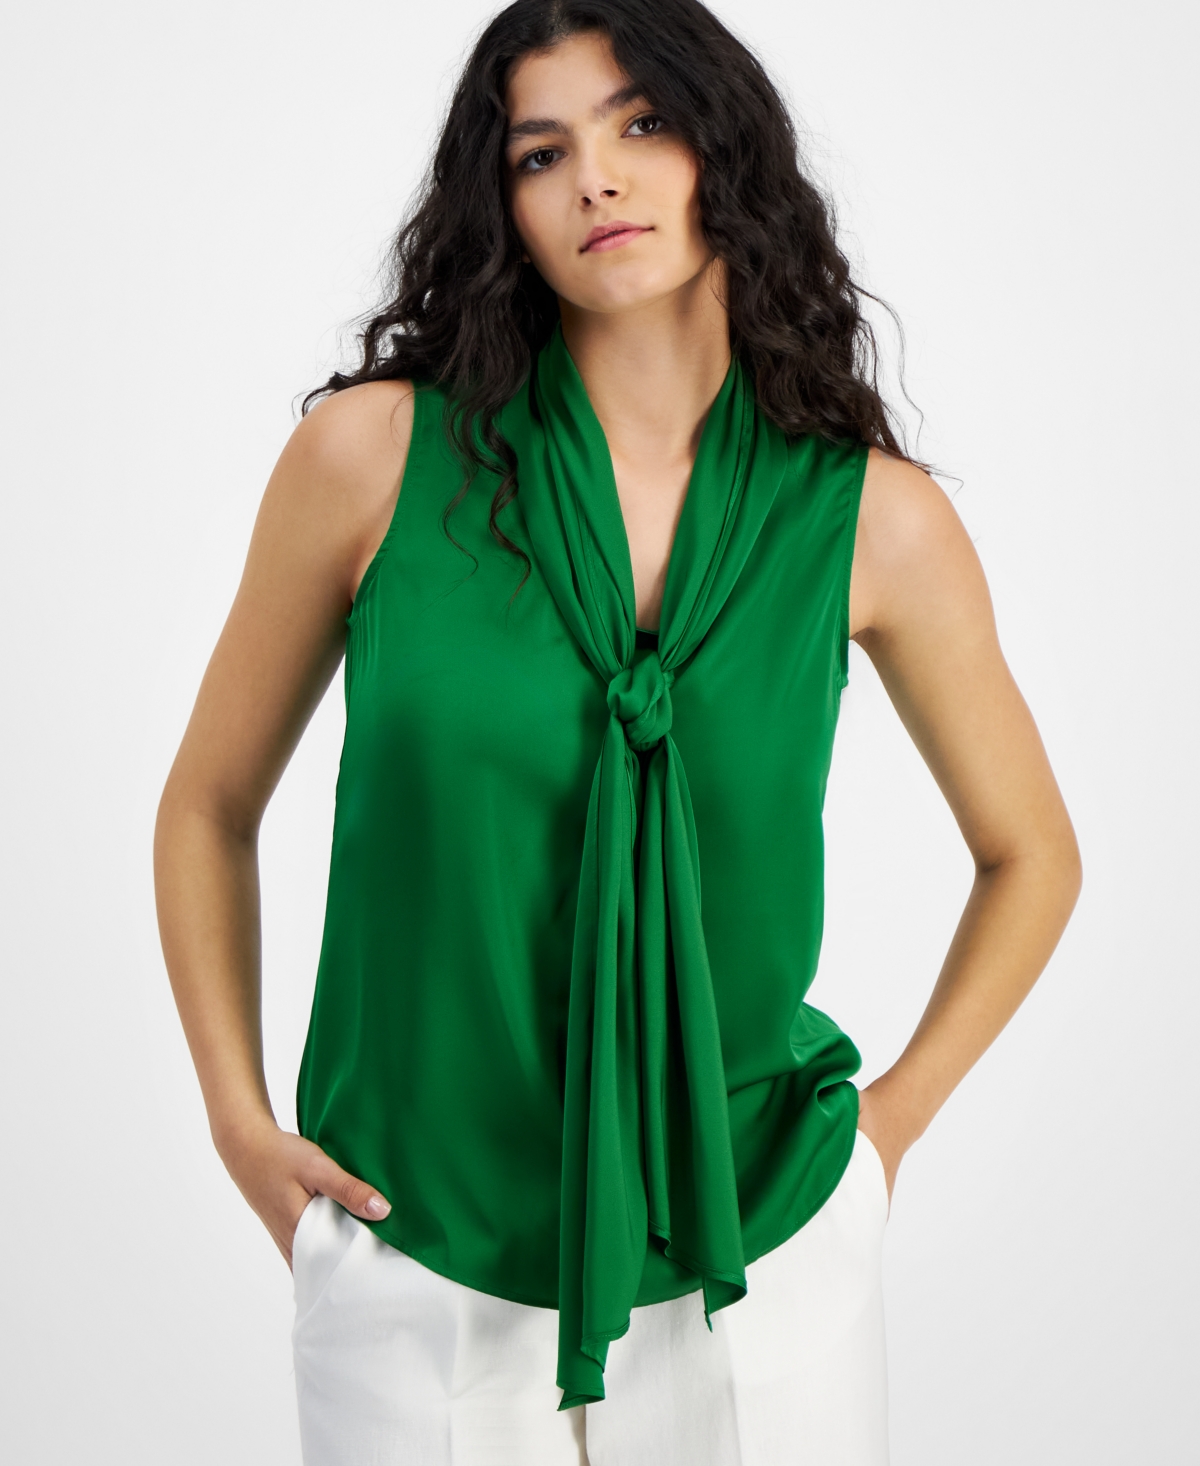 Women's Tie-Neck Sleeveless Satin Blouse, Created for Macy's - Green Apple